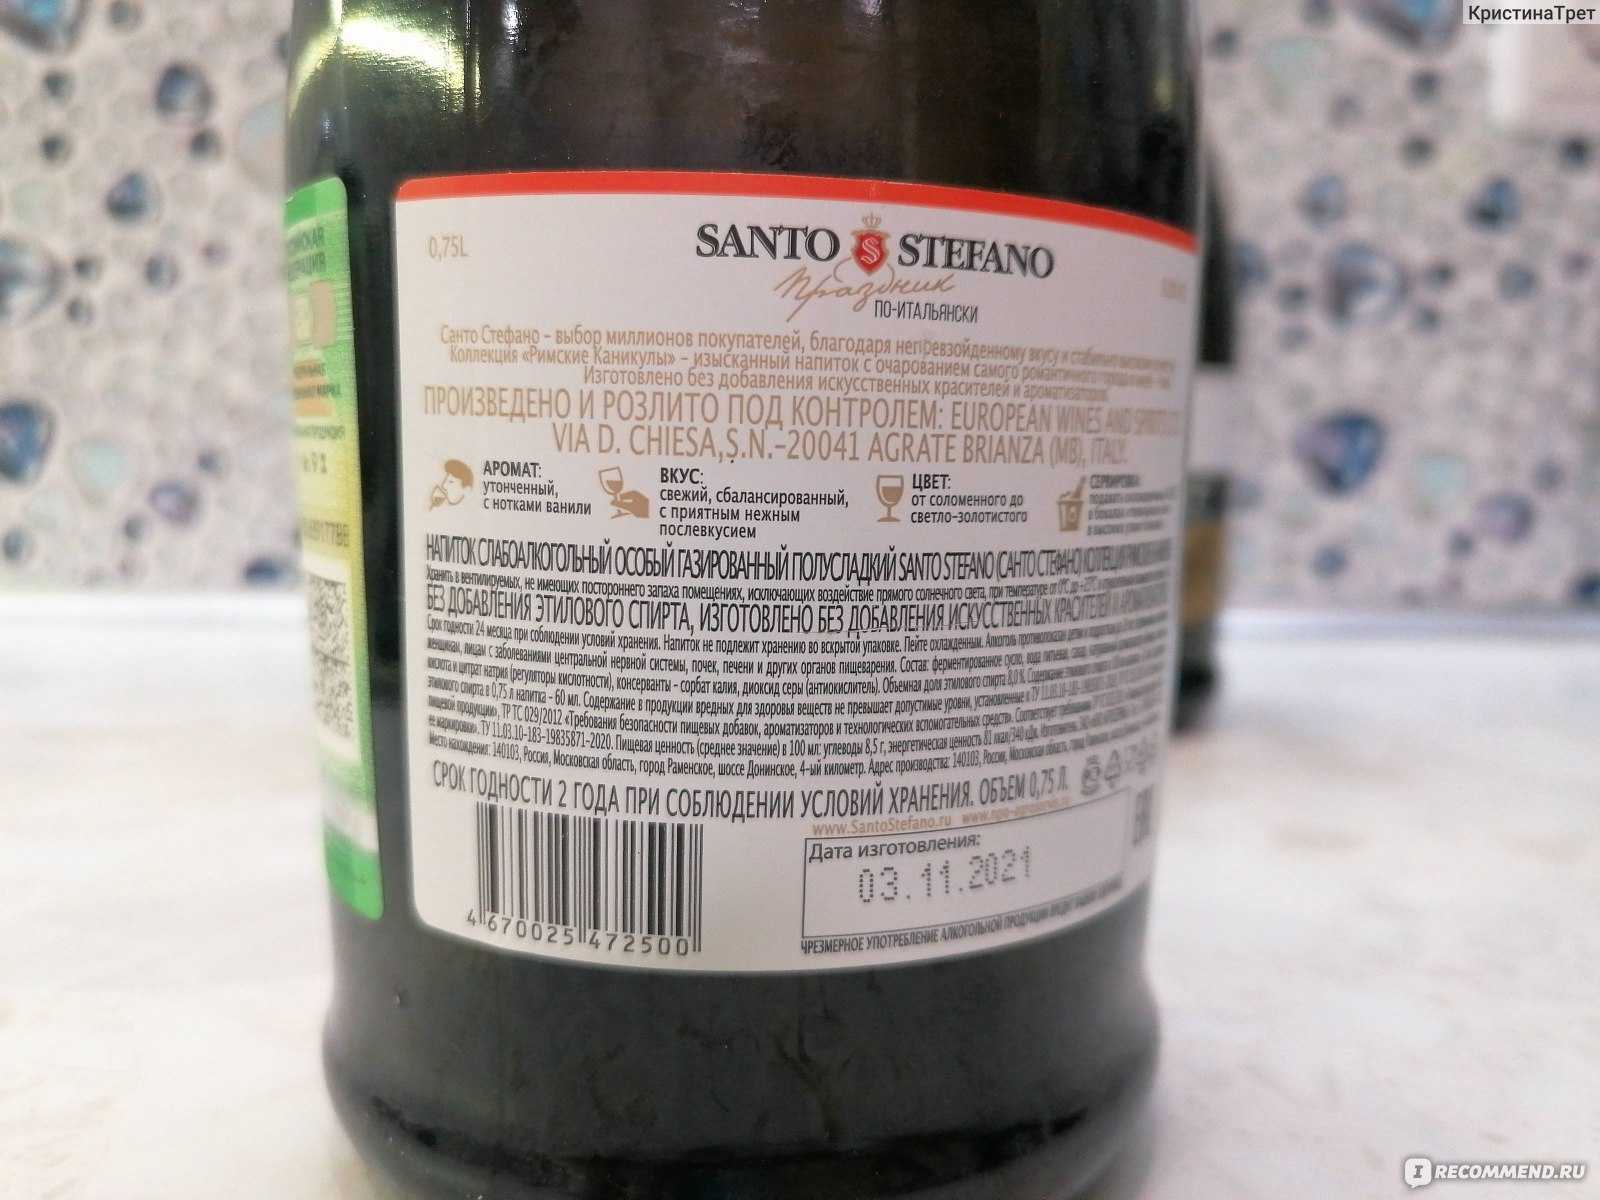 Виды шампанского санто стефано | wine & water